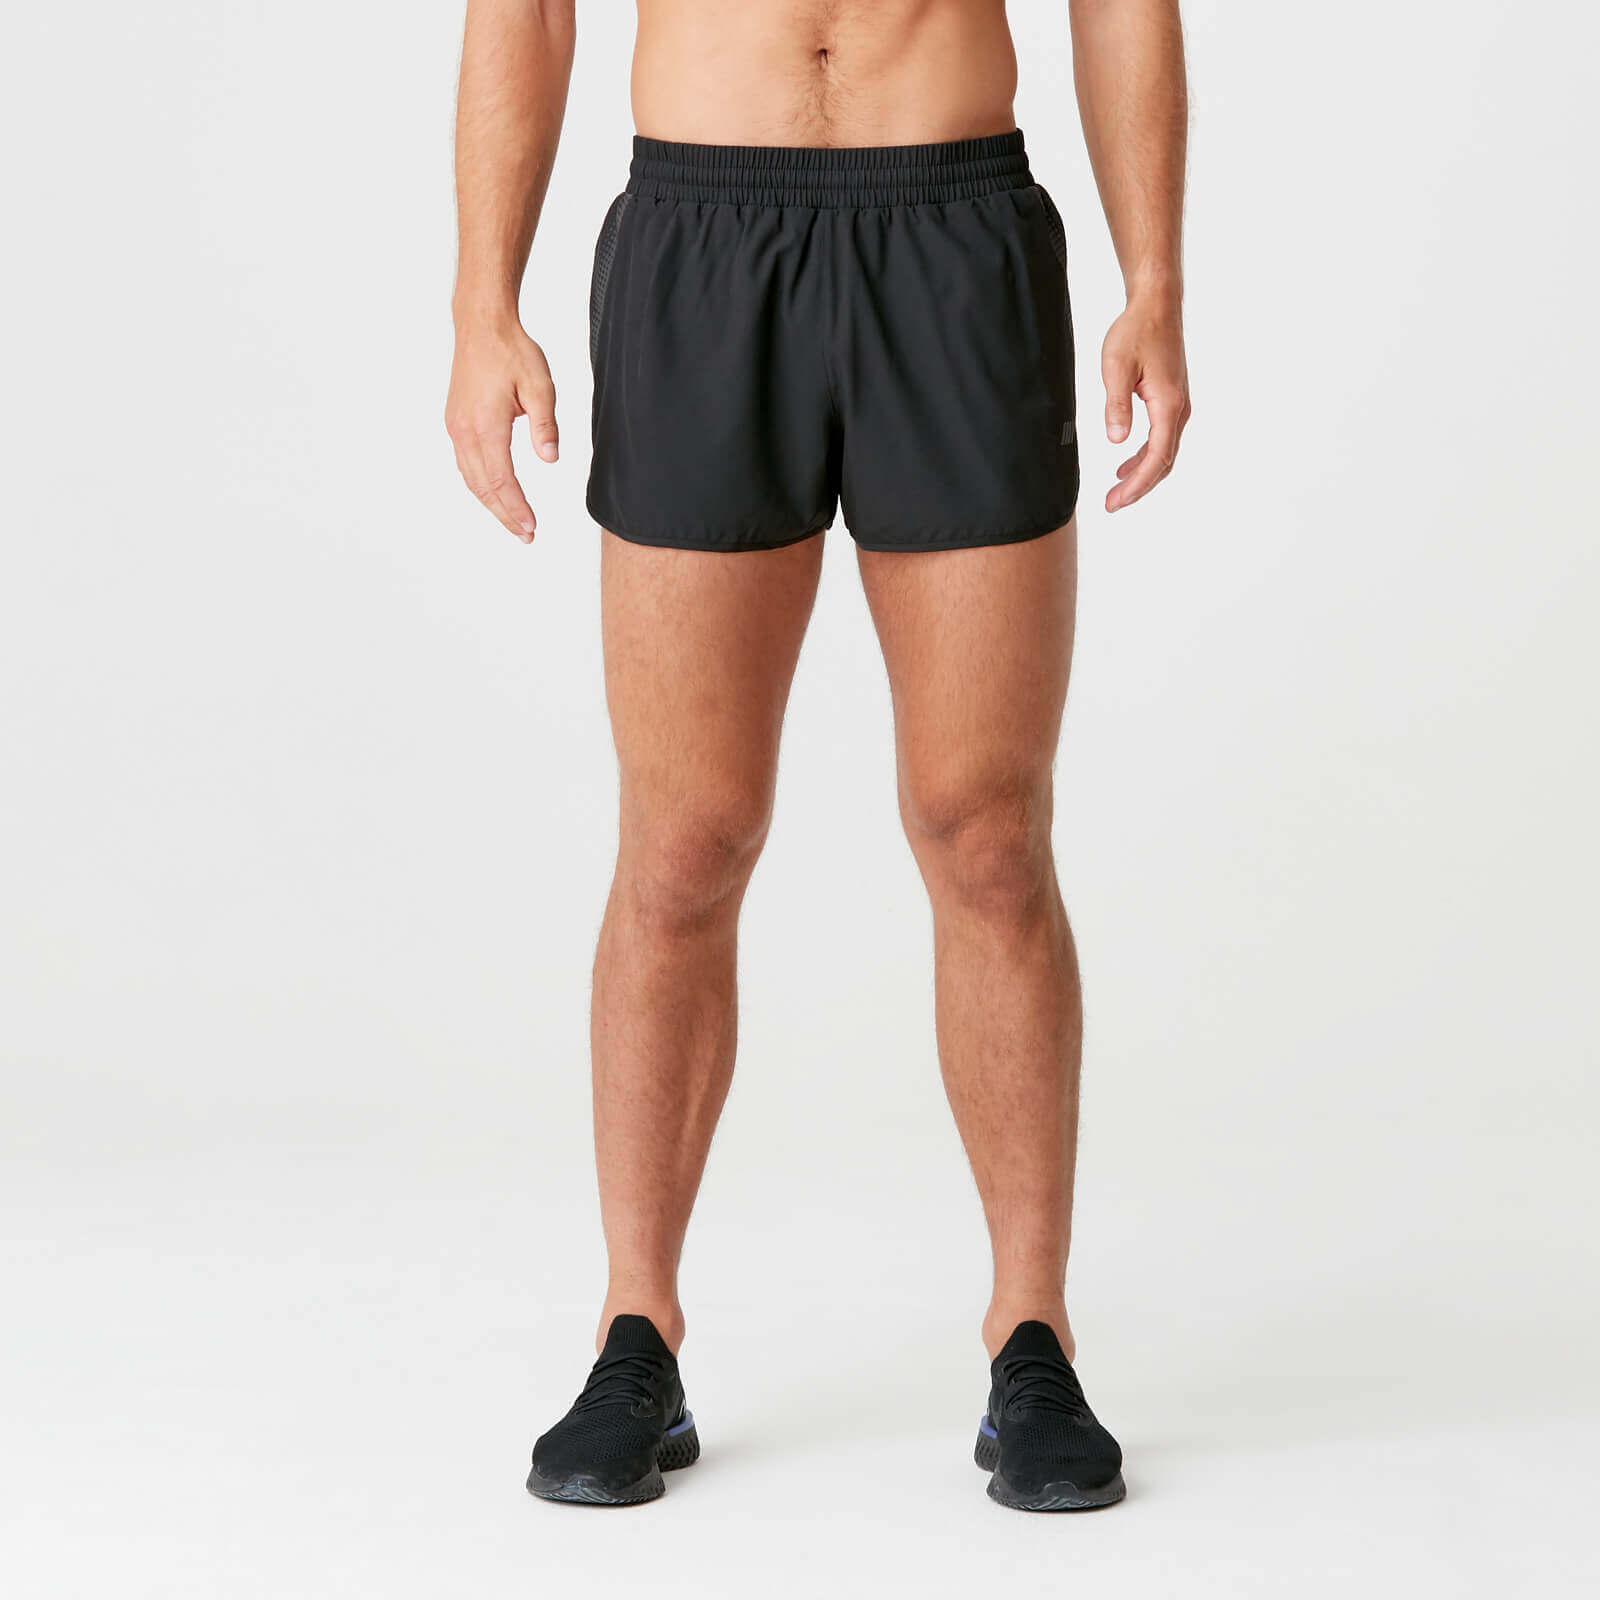 Boost Shorts - Black - XS